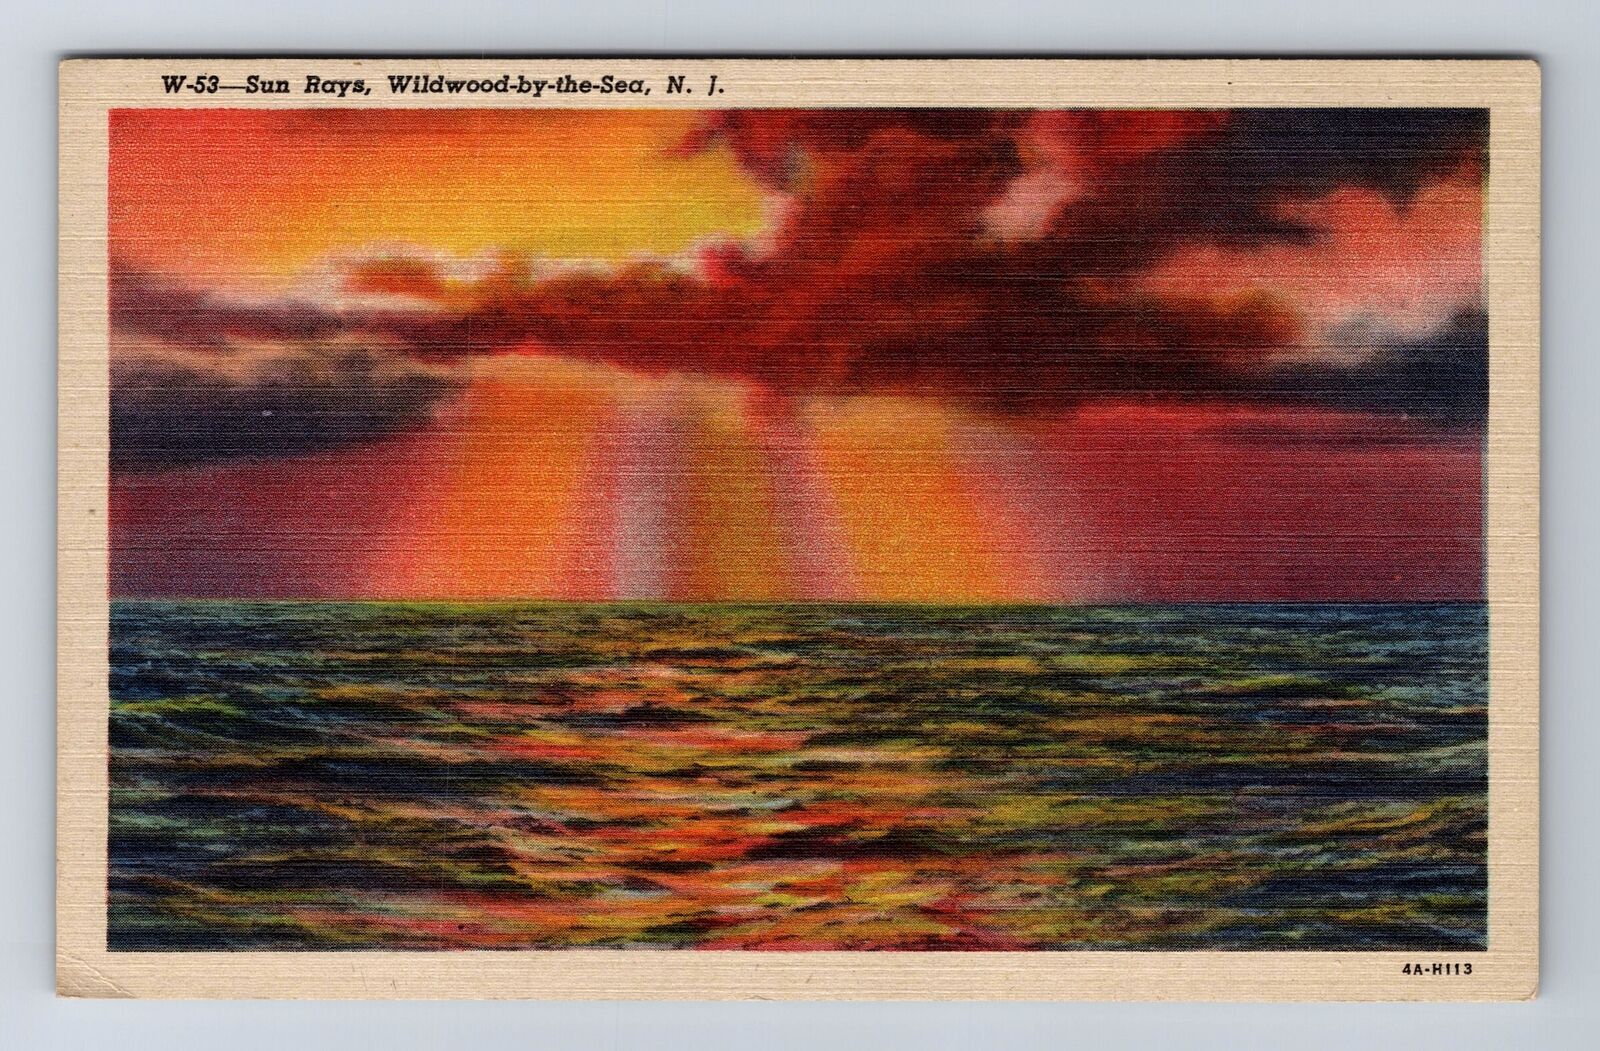 Wildwood-by-the-Sea NJ-New Jersey, Sun Rays on Ocean, Antique Vintage Postcard